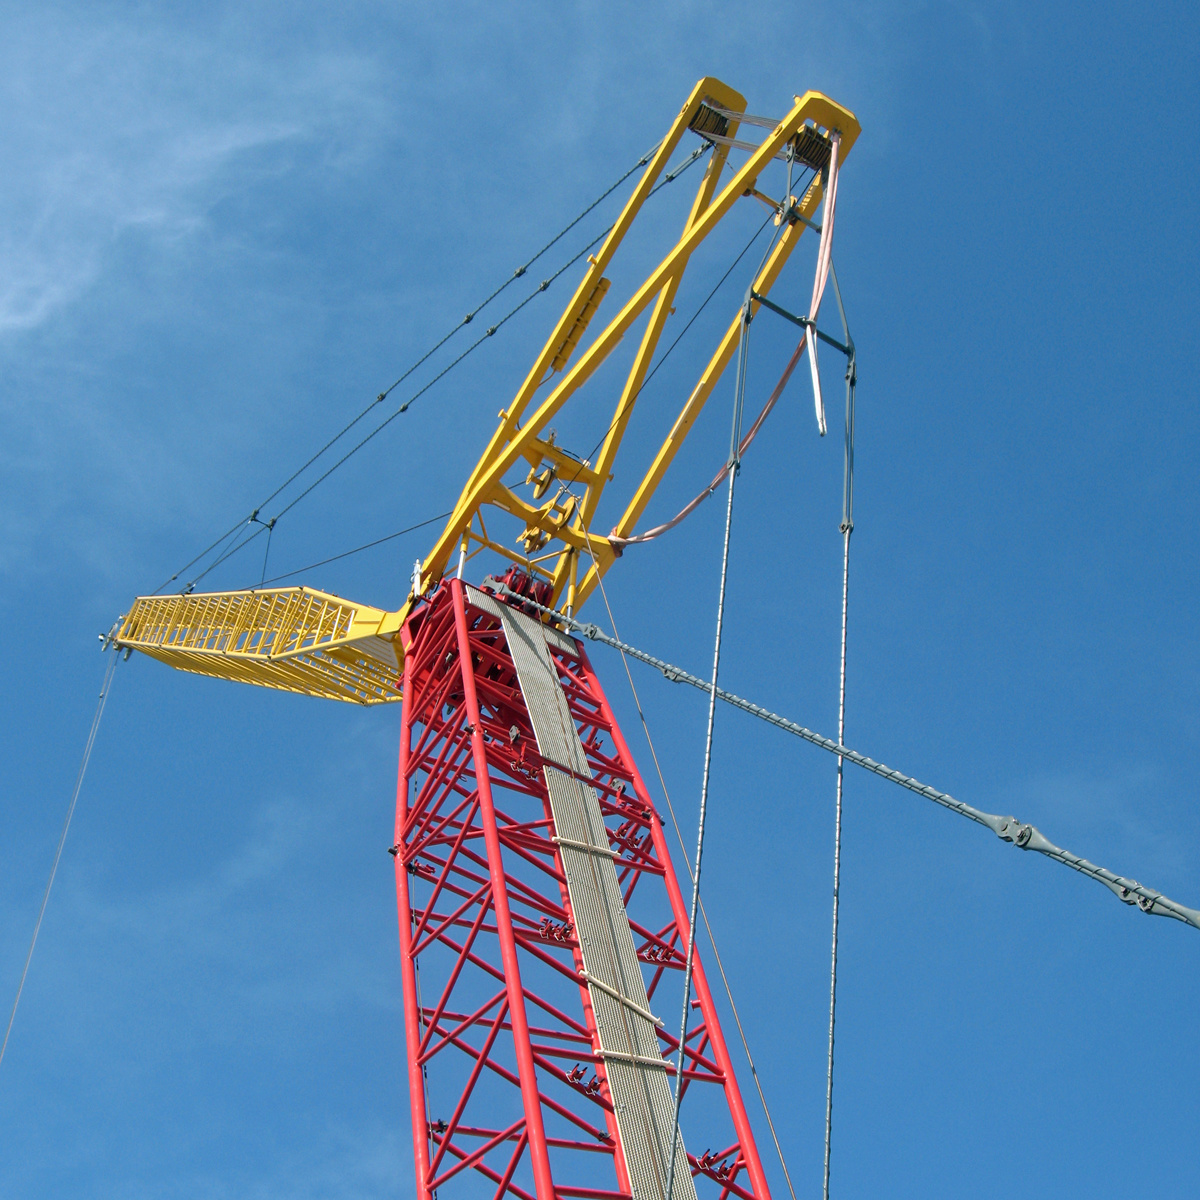 LR 1130.1 Crawler crane